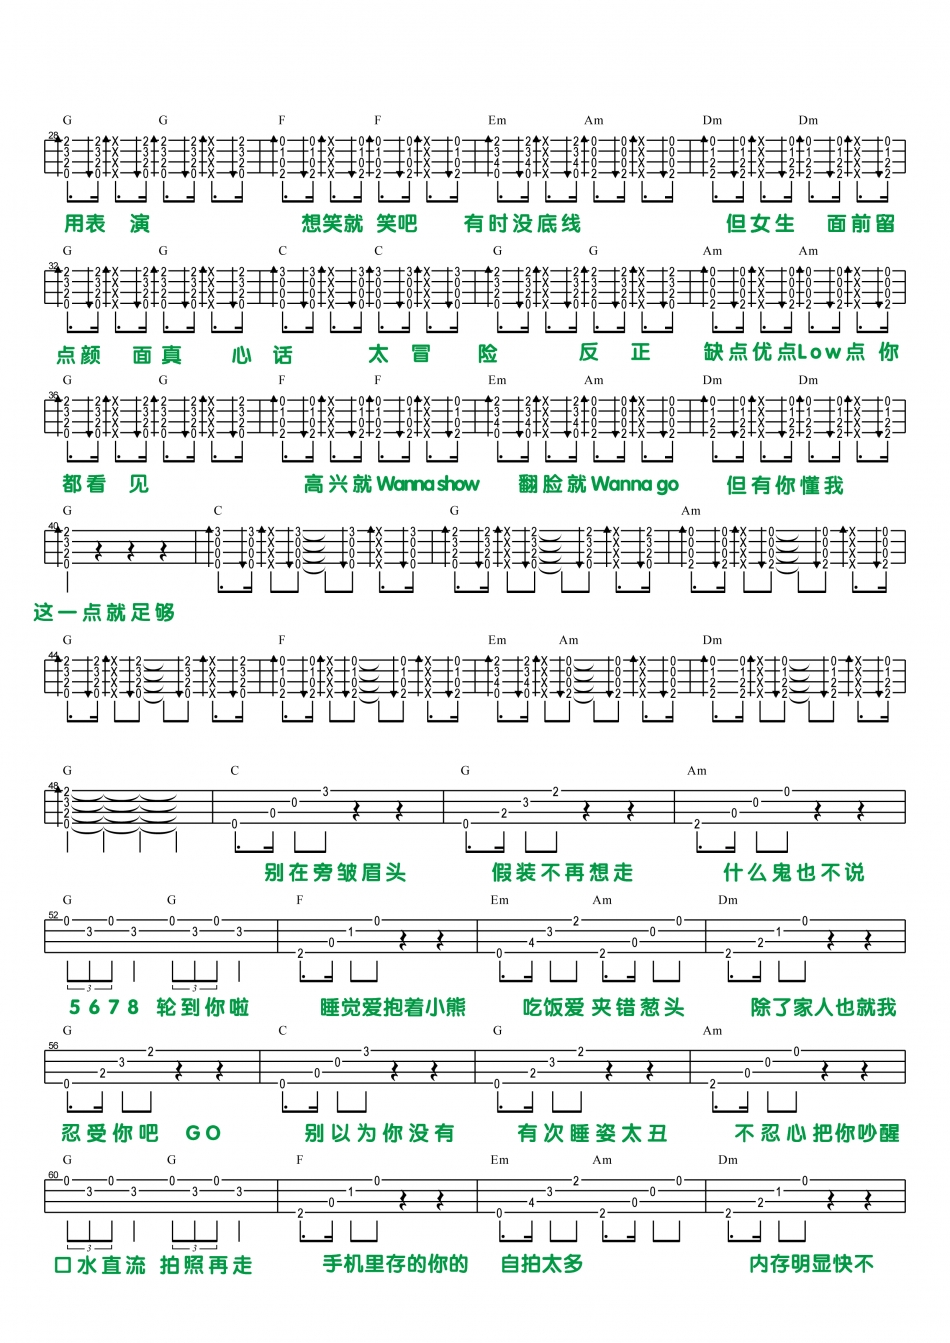 TFBOYS《真心话太冒险》吉他谱-Guitar Music Score